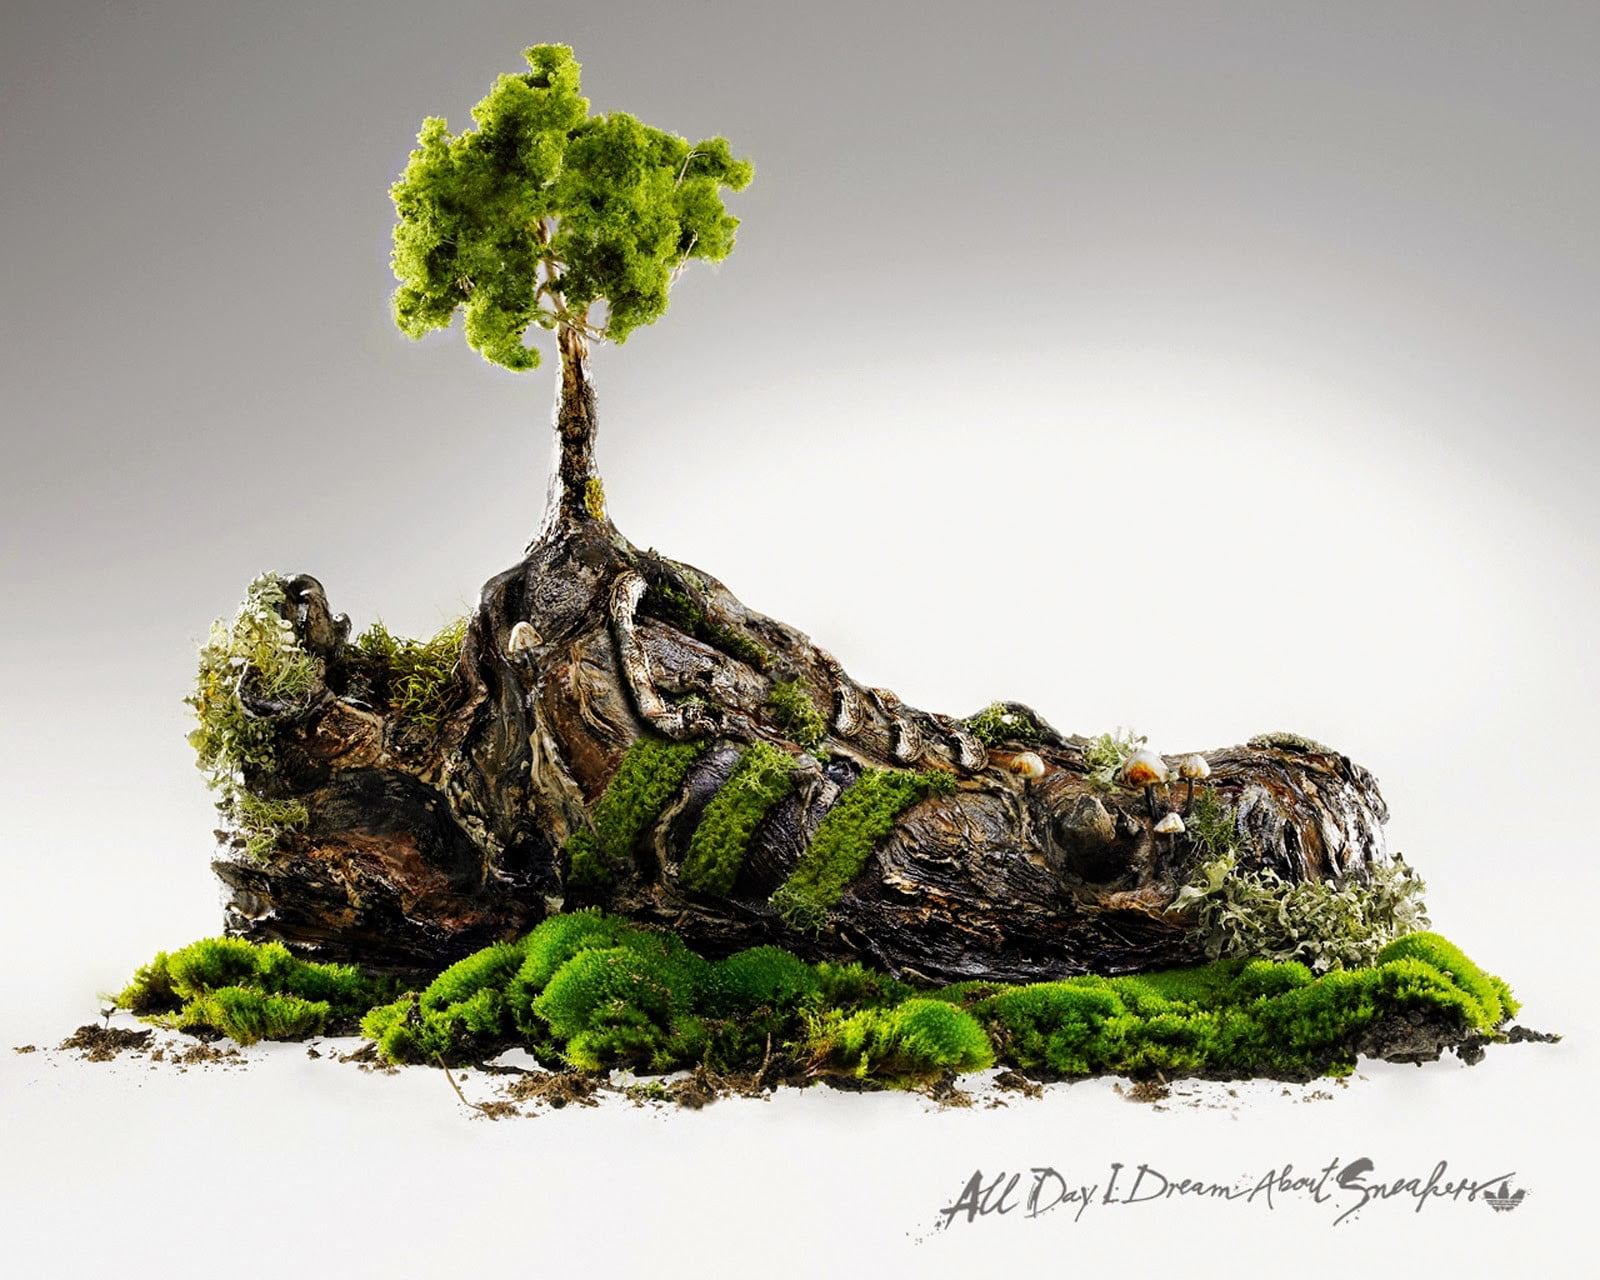 Green tree figurine wallpaper, digital art, Adidas, sneakers, nature, abstract